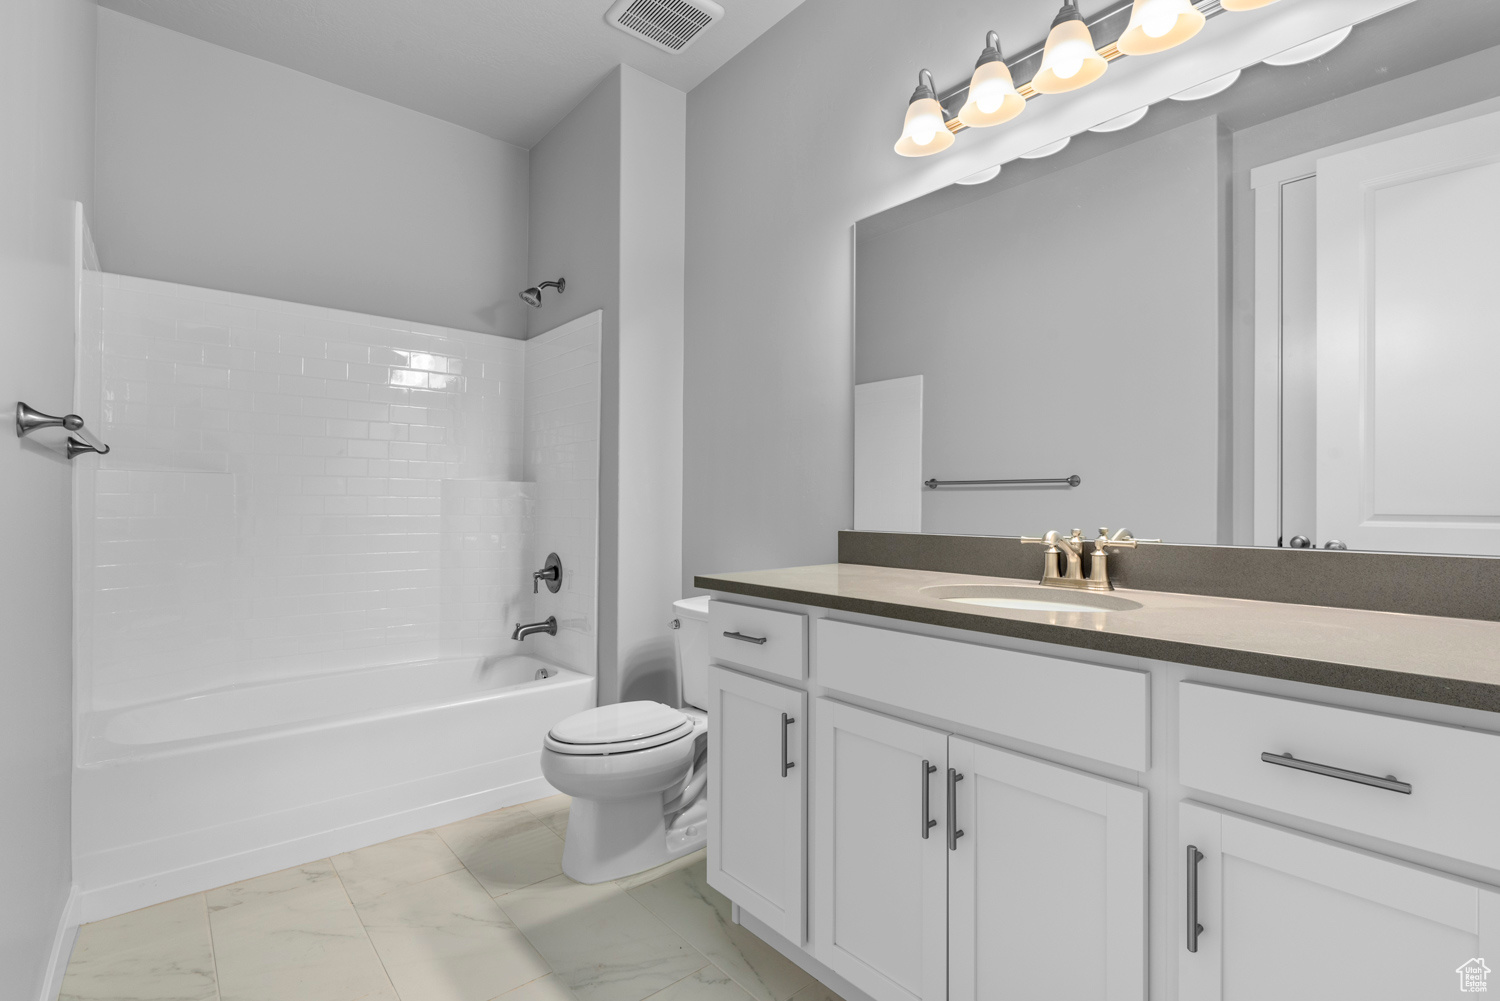 Full bathroom featuring tile flooring, toilet, vanity, and washtub / shower combination